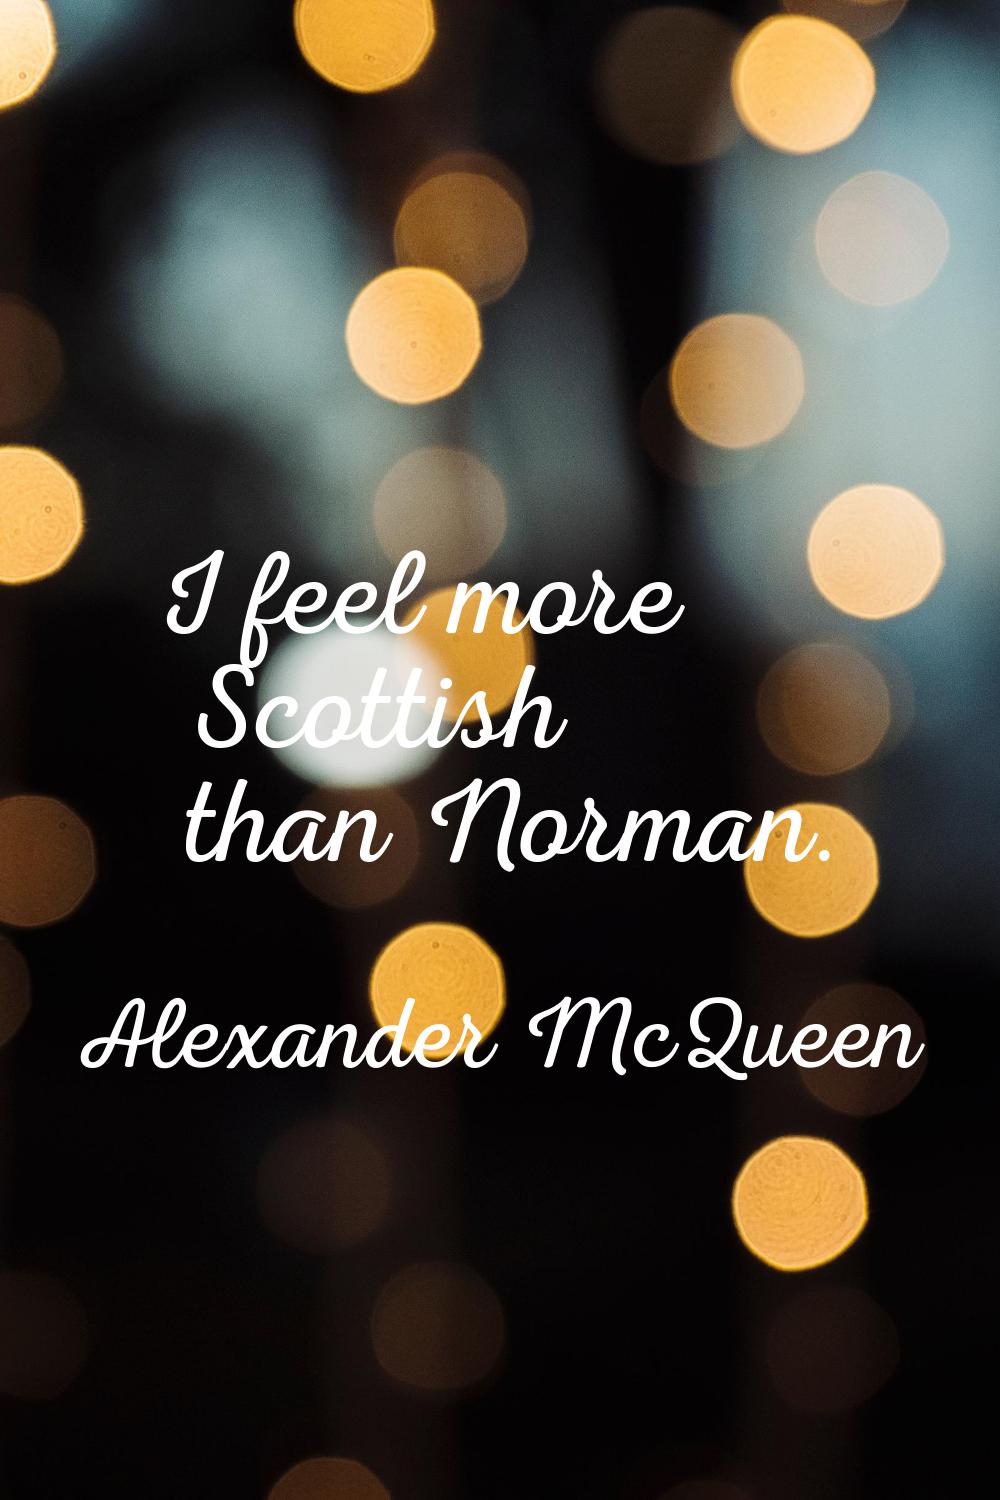 I feel more Scottish than Norman.